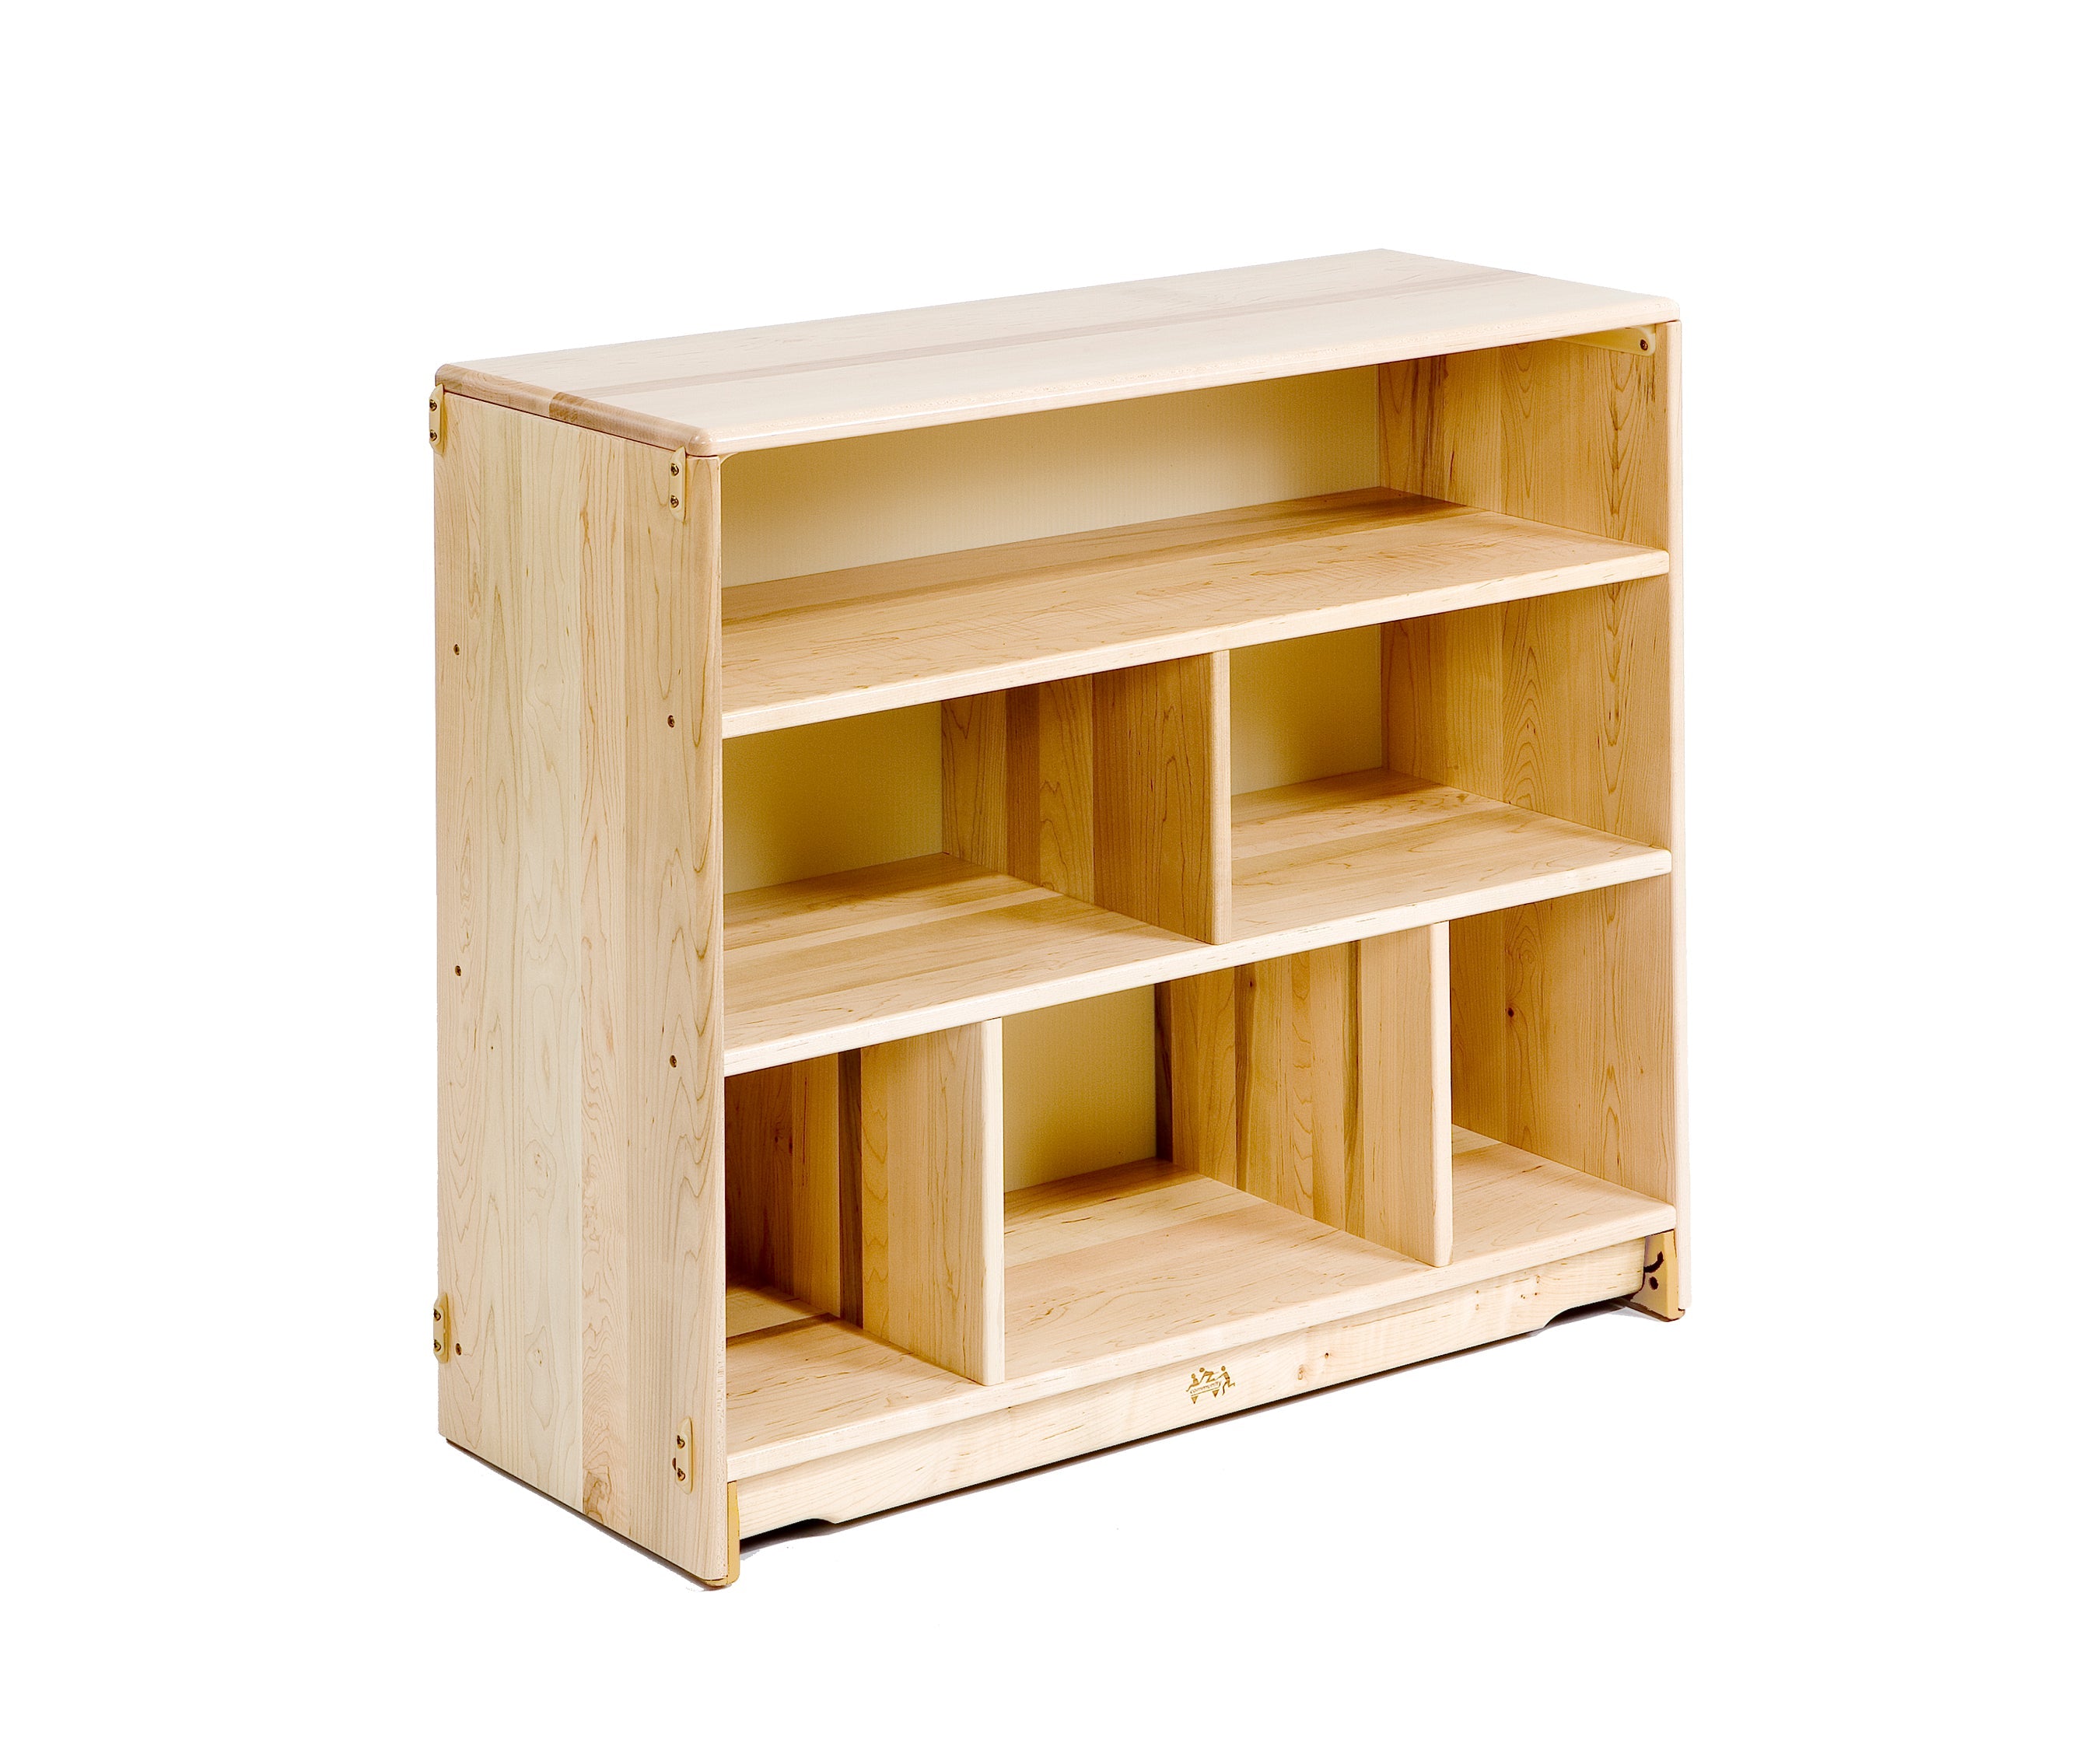 Fixed Shelf 3' x 32" by Community Playthings - louisekool